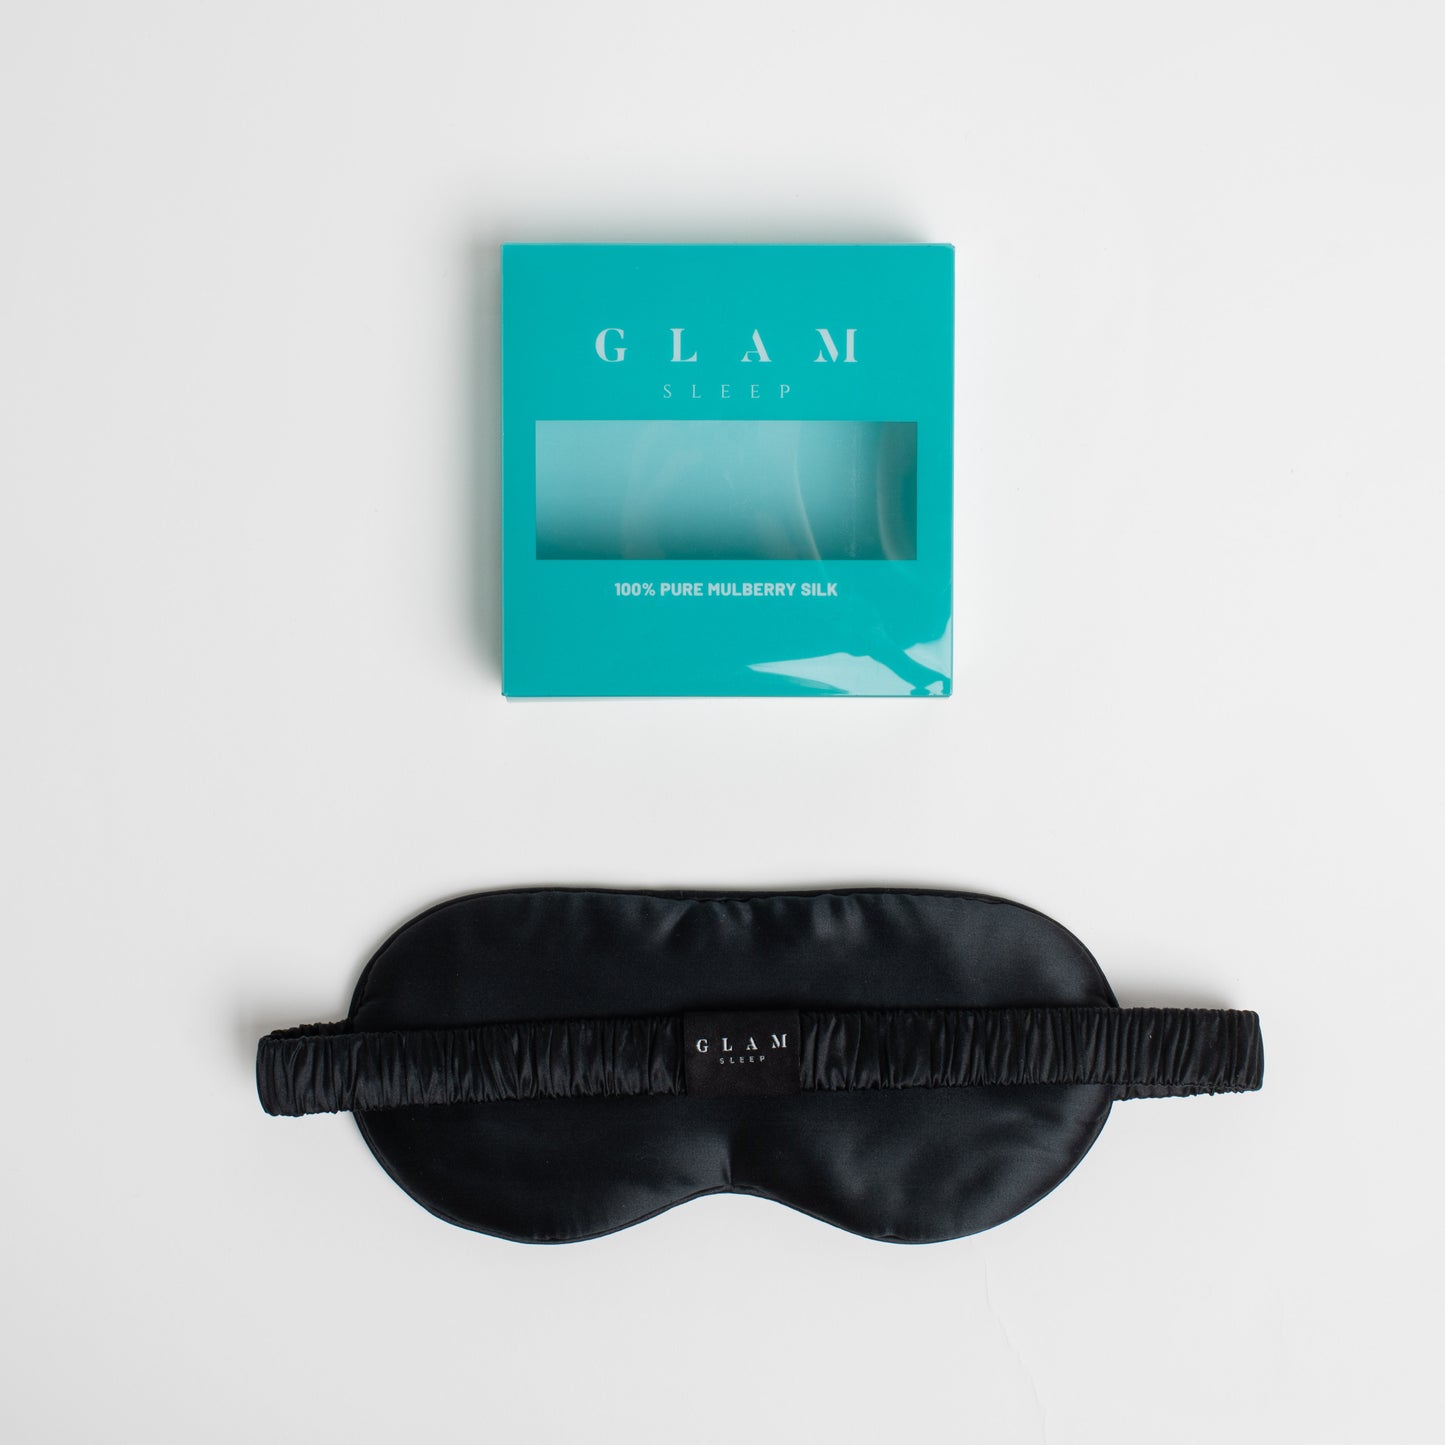 The Glam Silk Eye Mask - Glam Sleep 